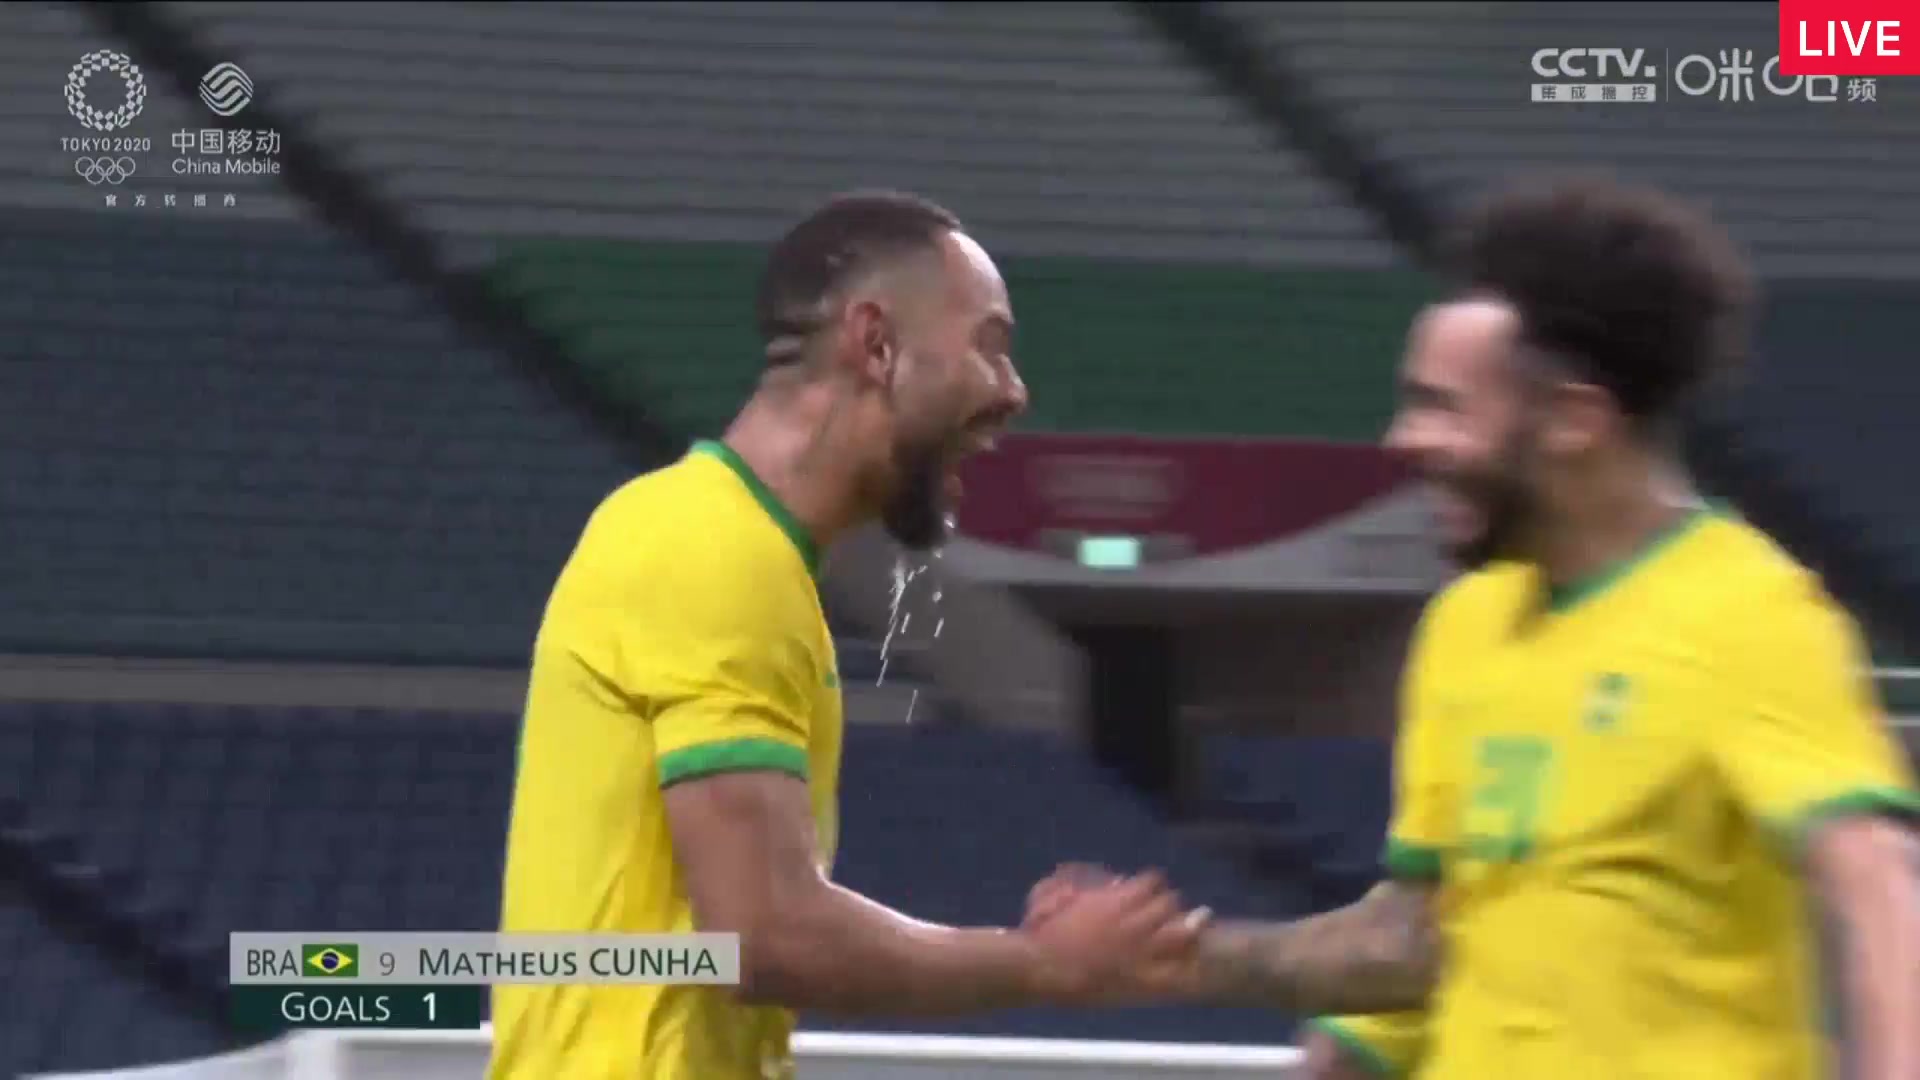 MOFT Brazil U23 Vs Egypt U23 Matheus Cunha Goal in 37 min, Score 1:0